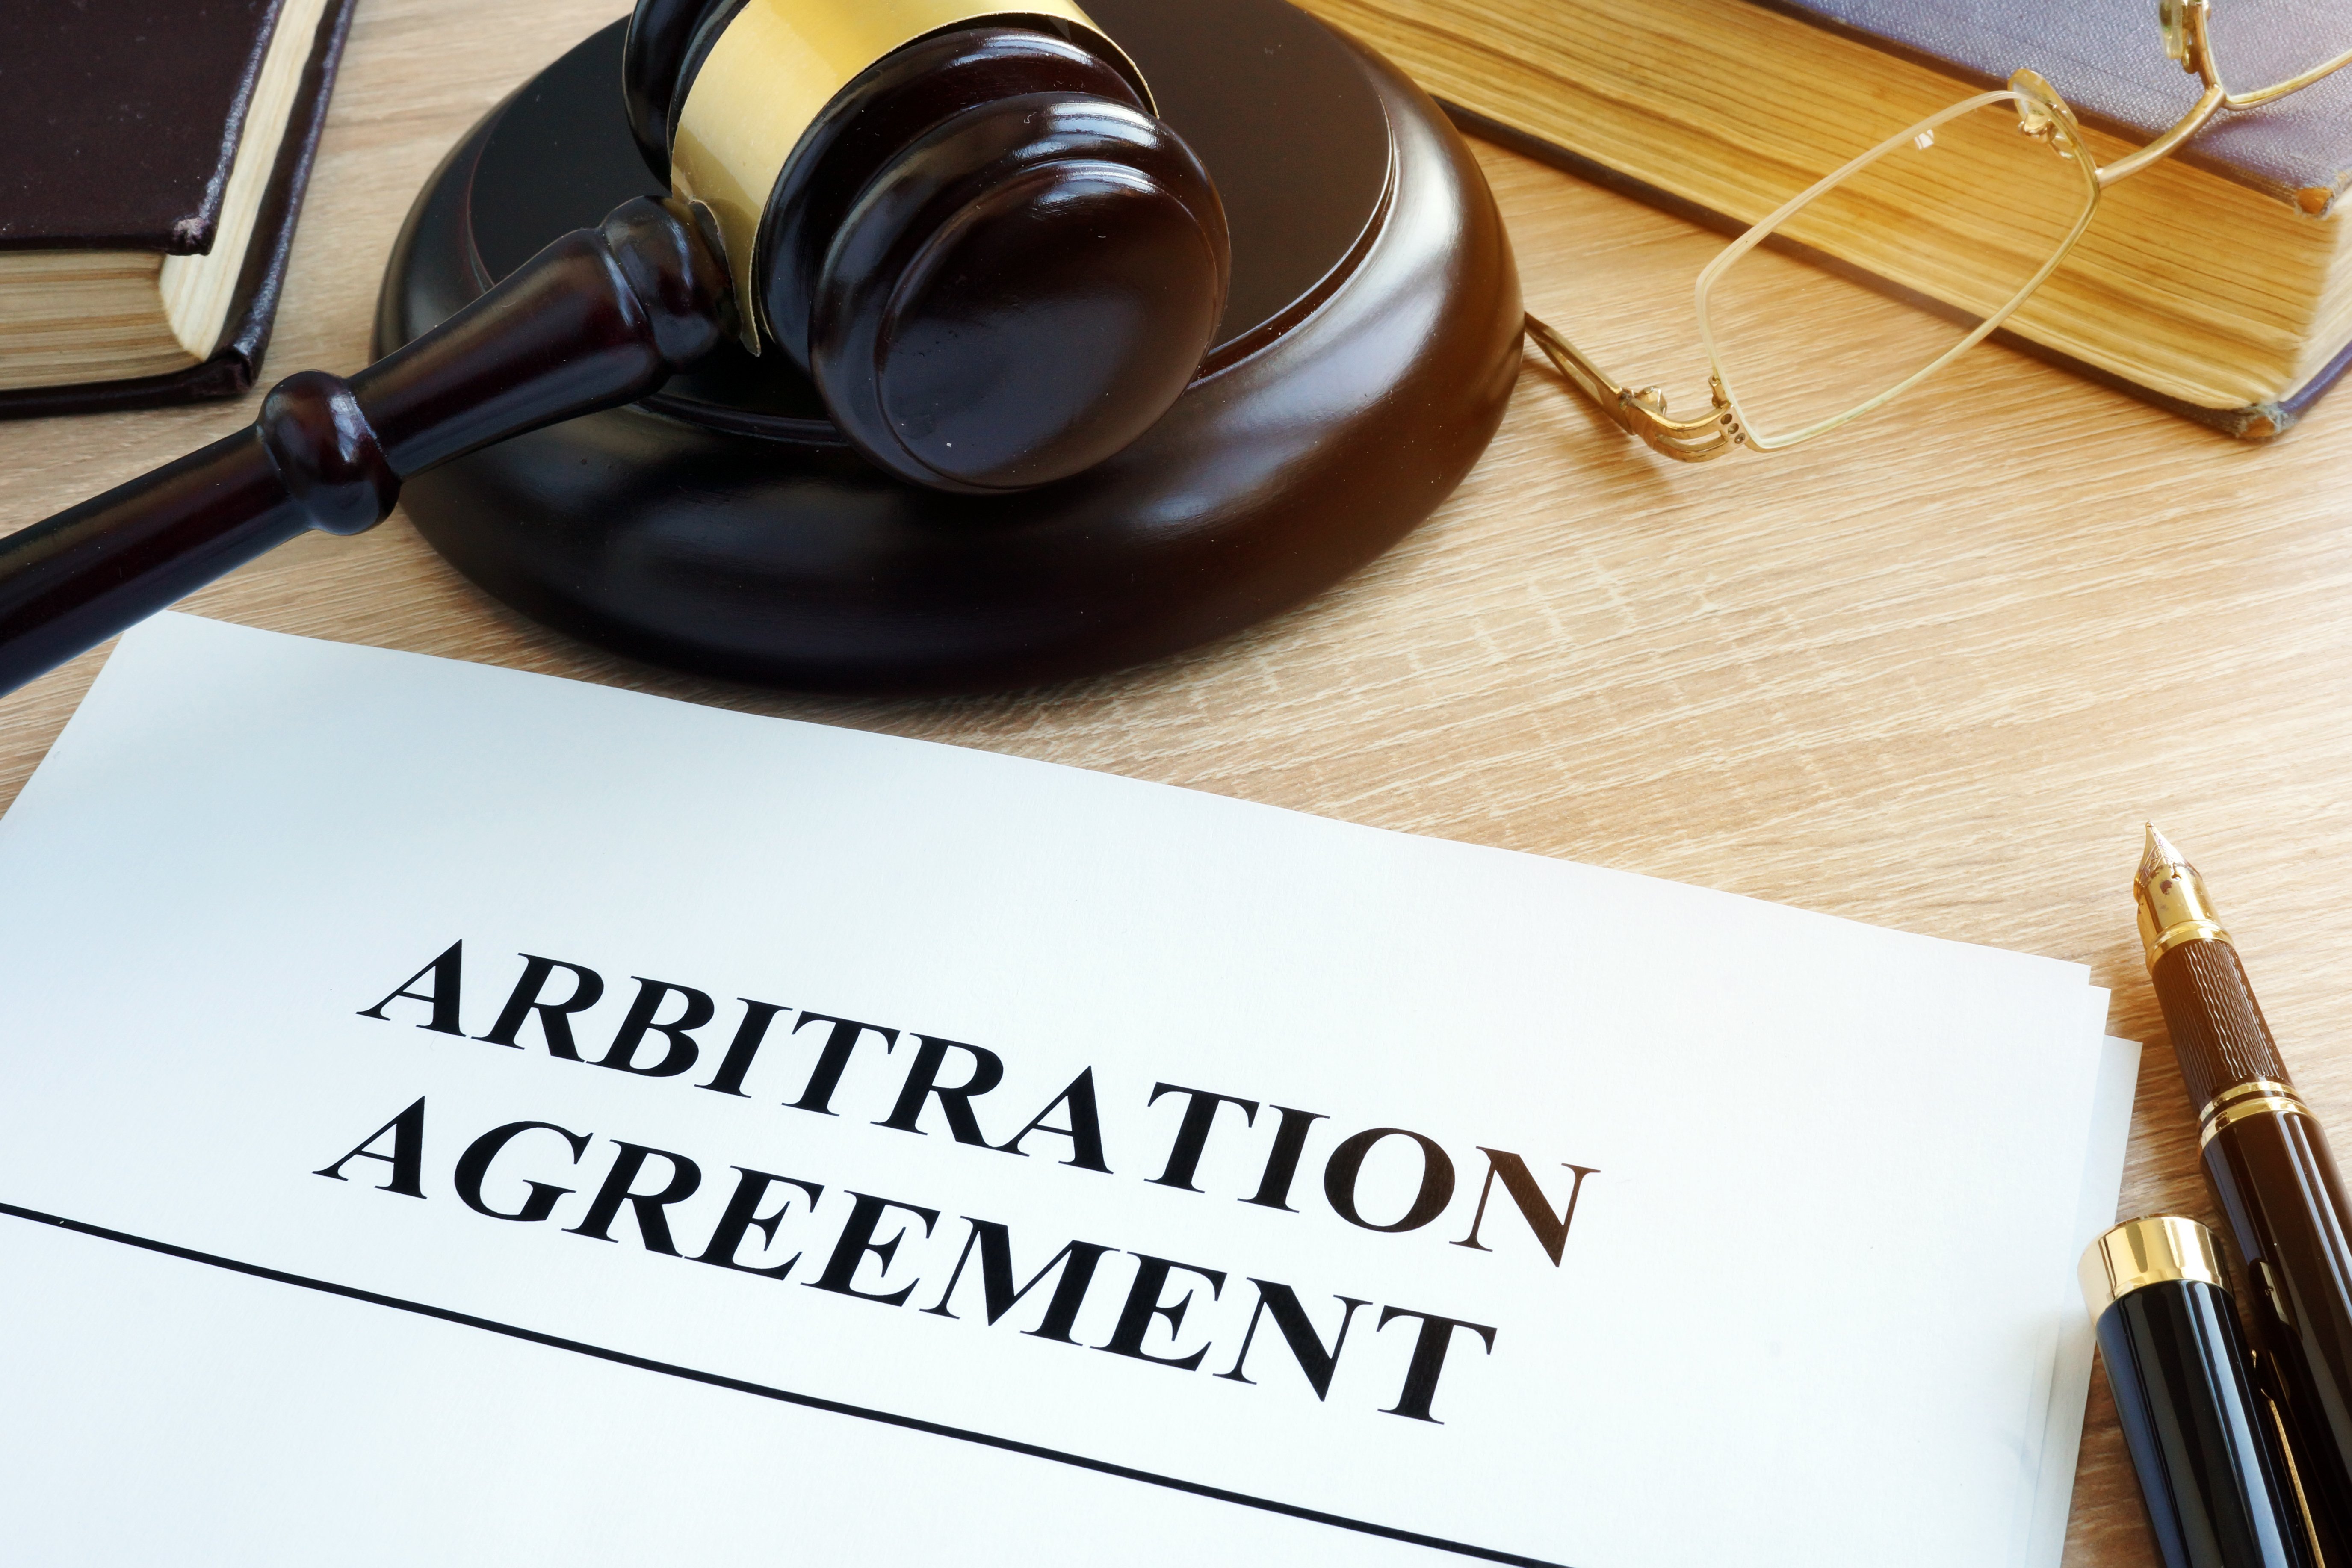 Arbitration agreement lying on desk next to gavel